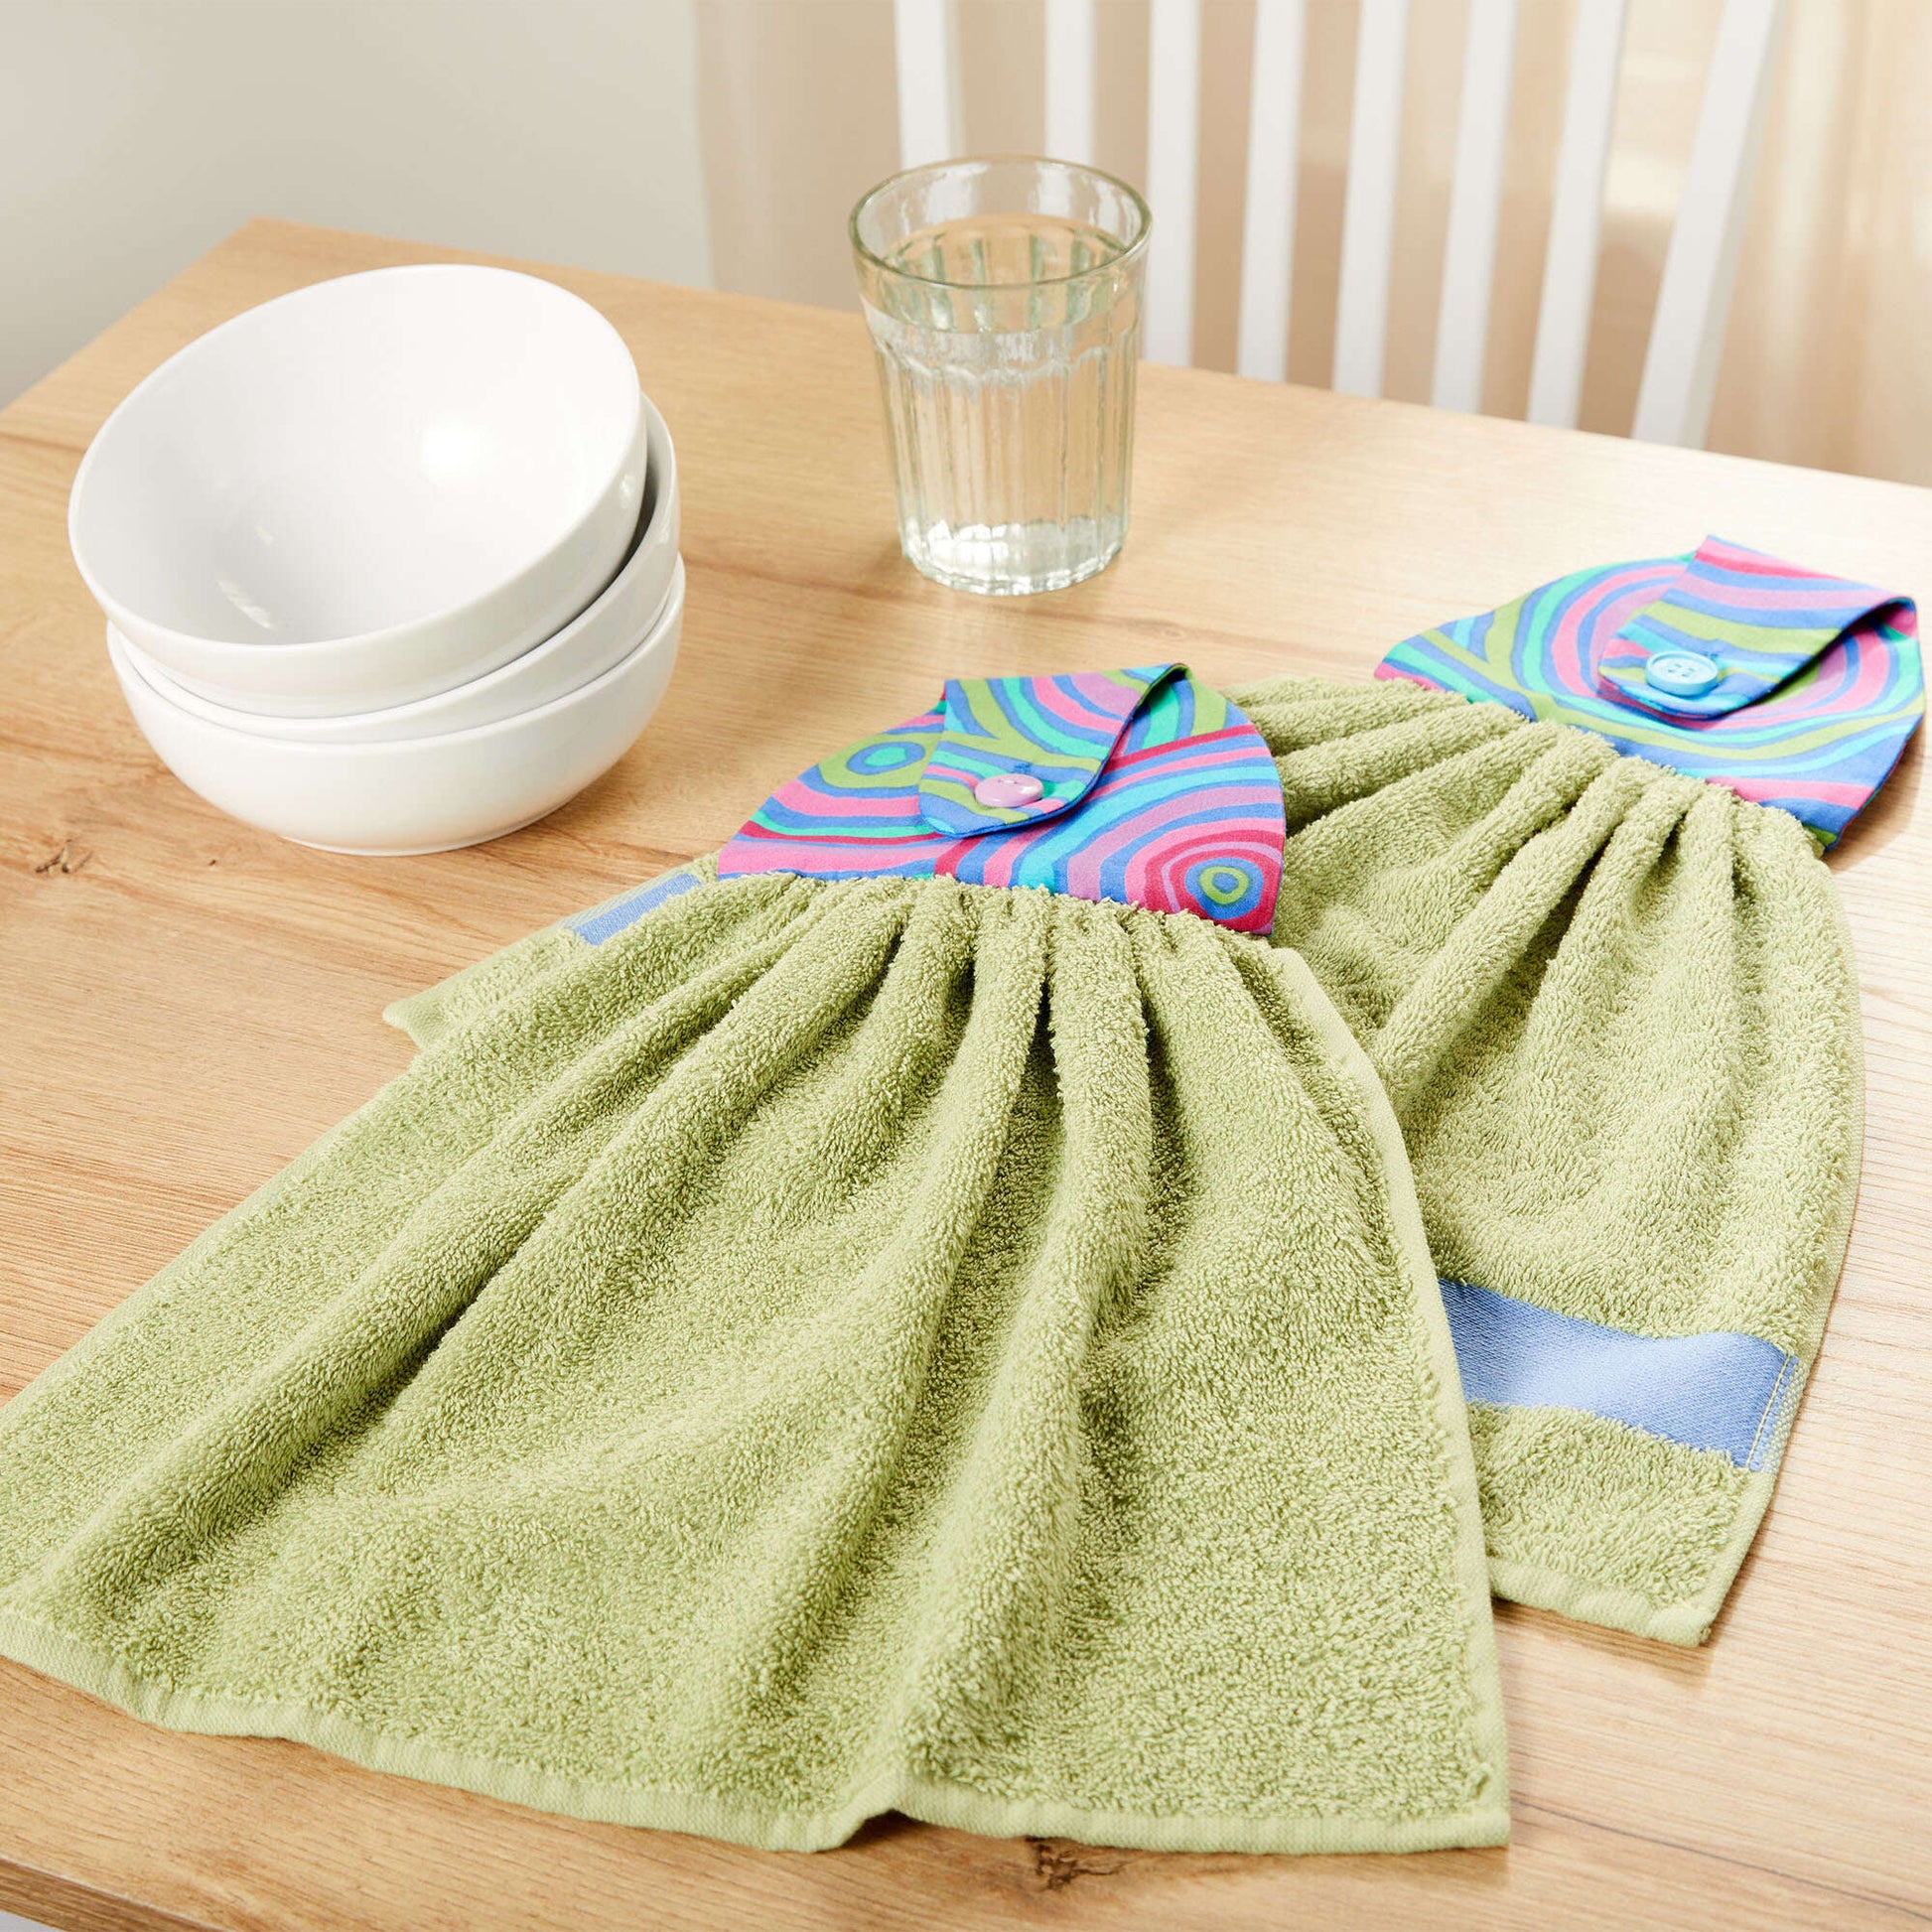 Free Coats & Clark Towel Tabs Sewing Pattern